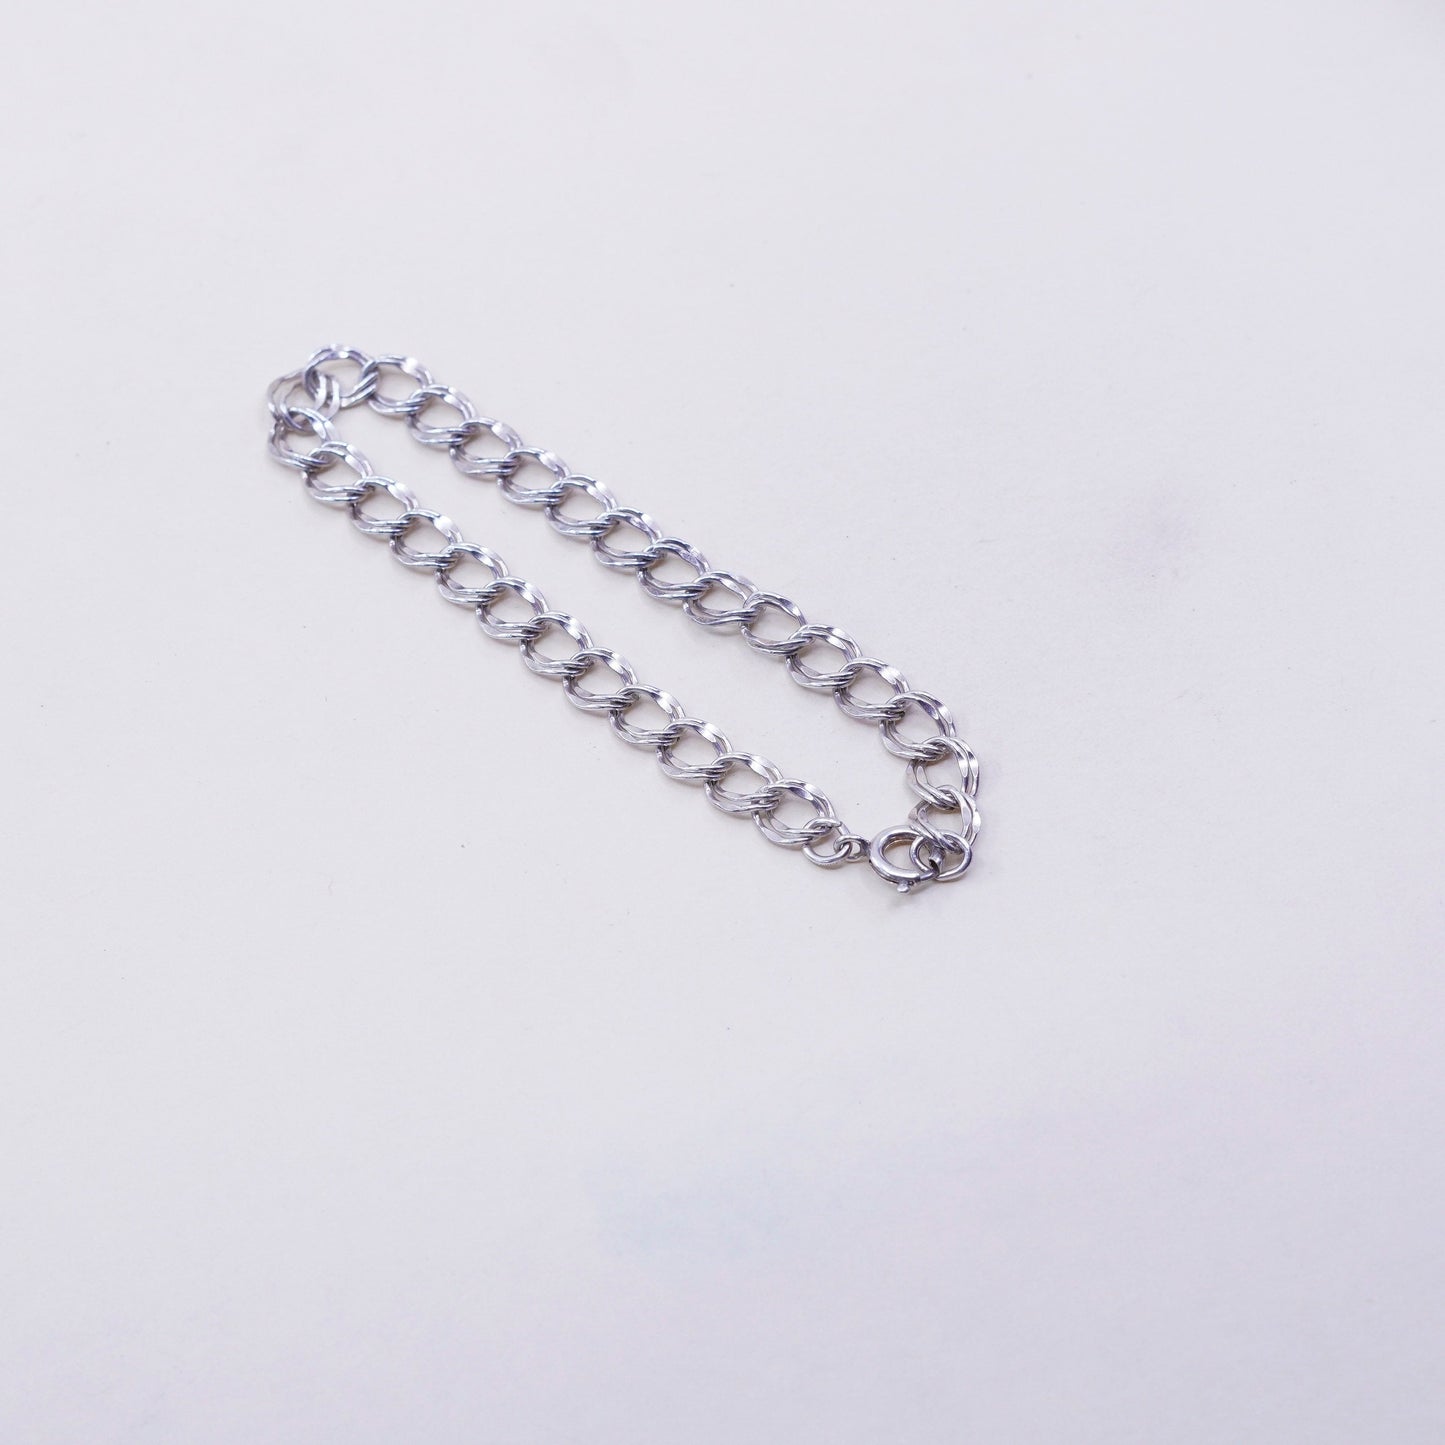 7”, 7mm, Vintage prochain sterling silver bracelet, 925 double curb chain